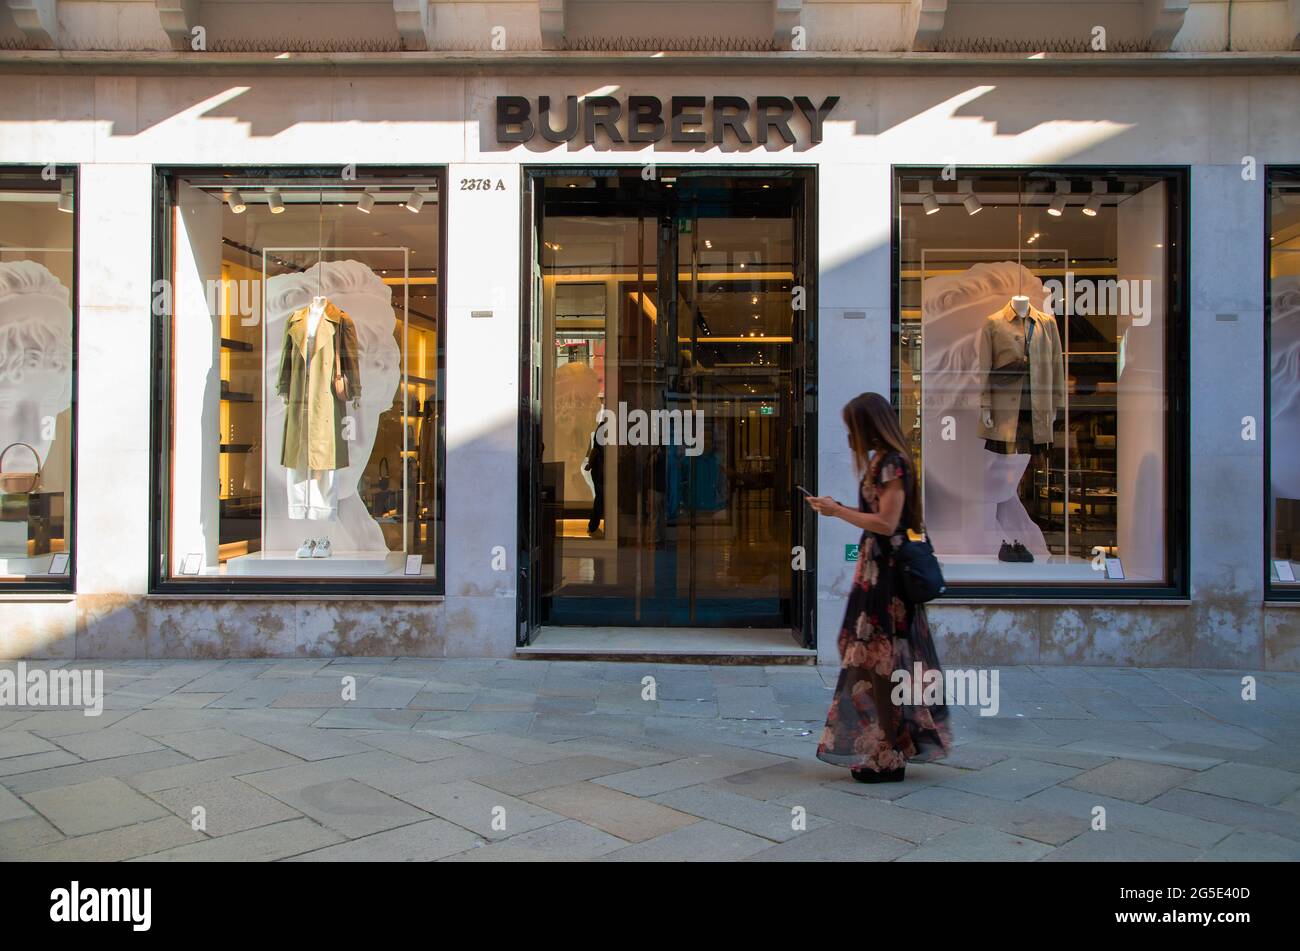 Burberry windows in Venice, Italy Stock Photo - Alamy